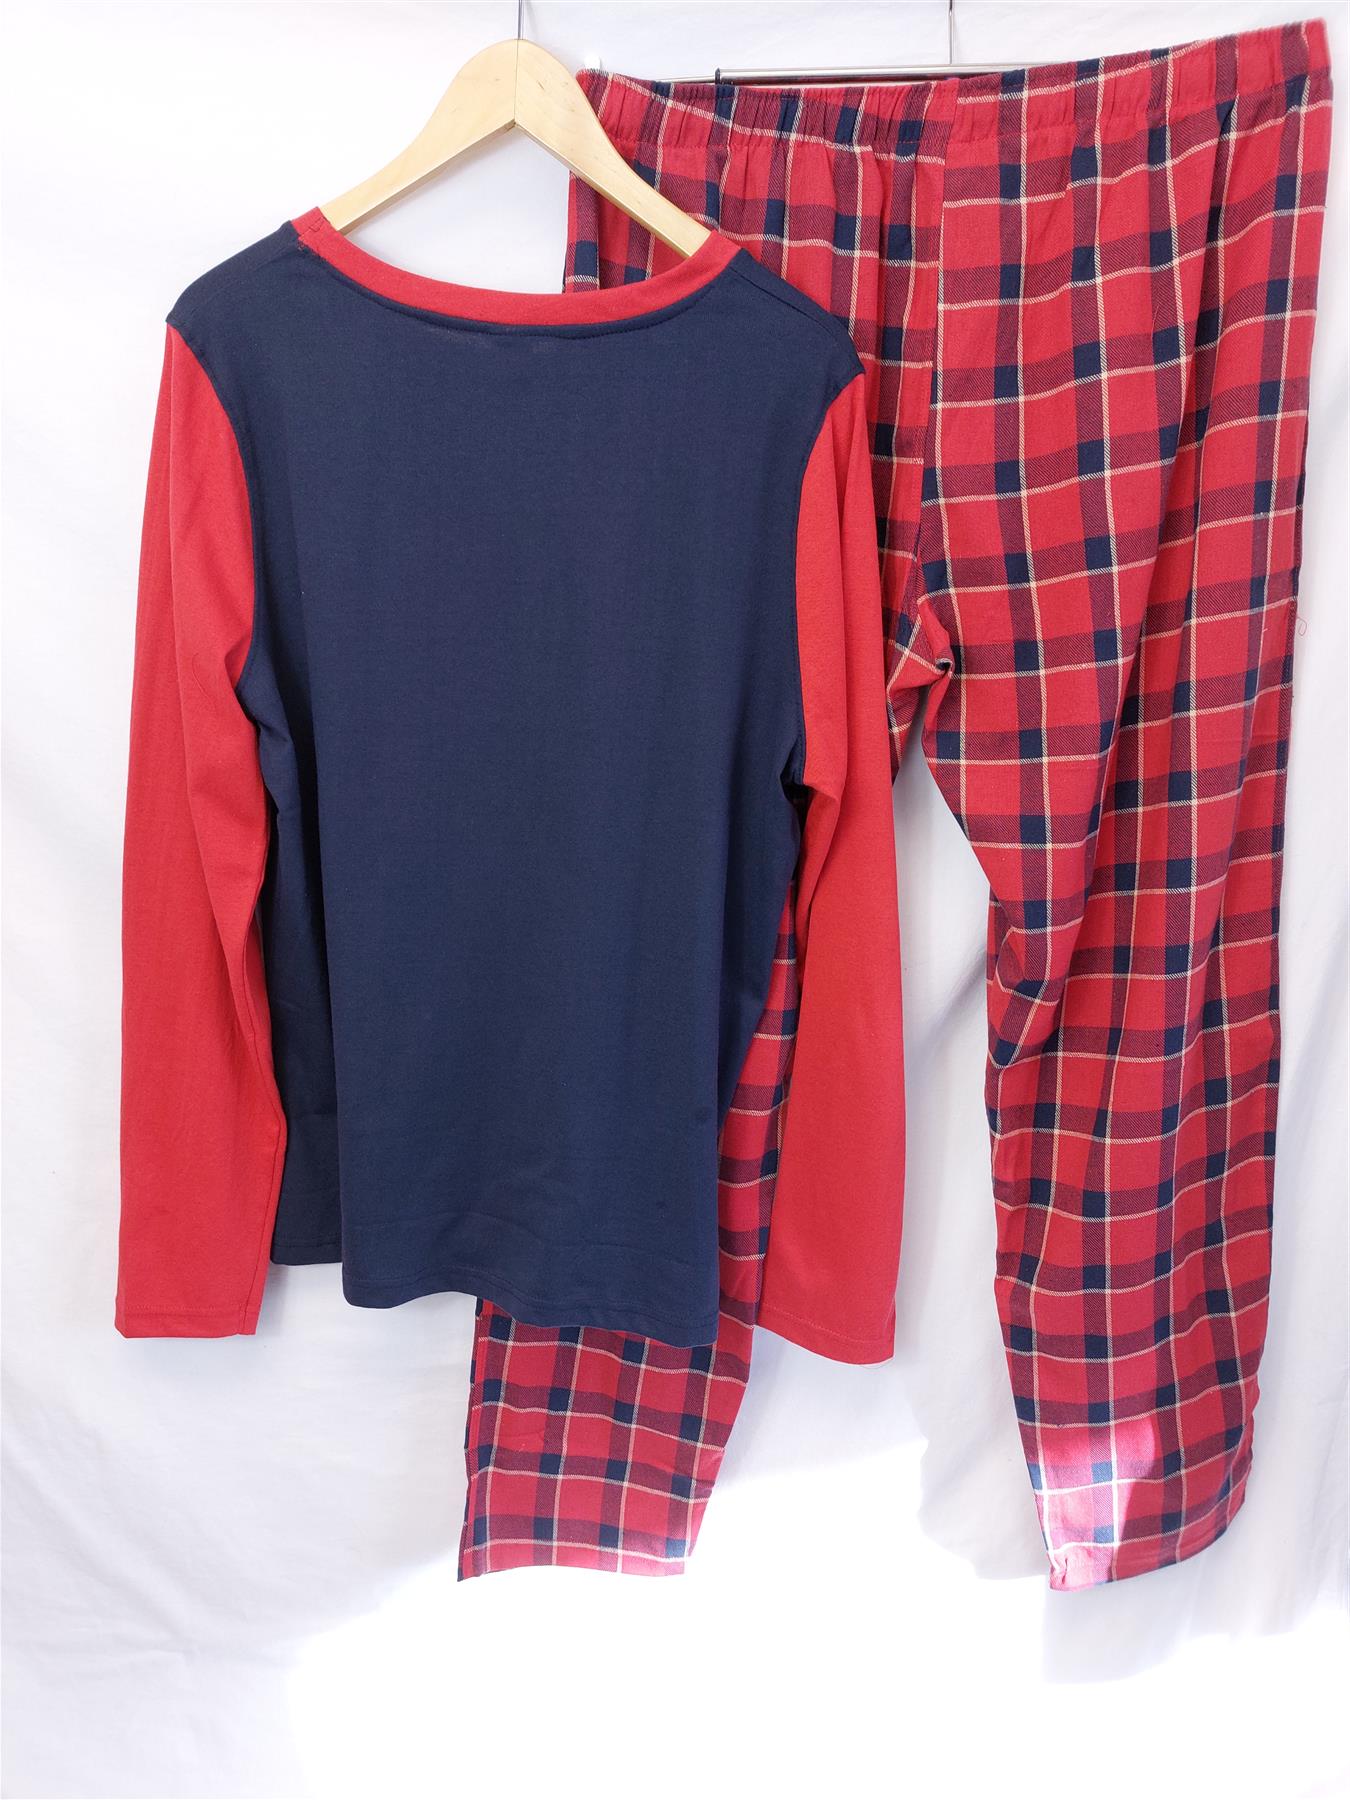 Men's Pyjama Set Cotton Rich Comfy Warm PJs Sleepwear Tartan Check Red Navy New